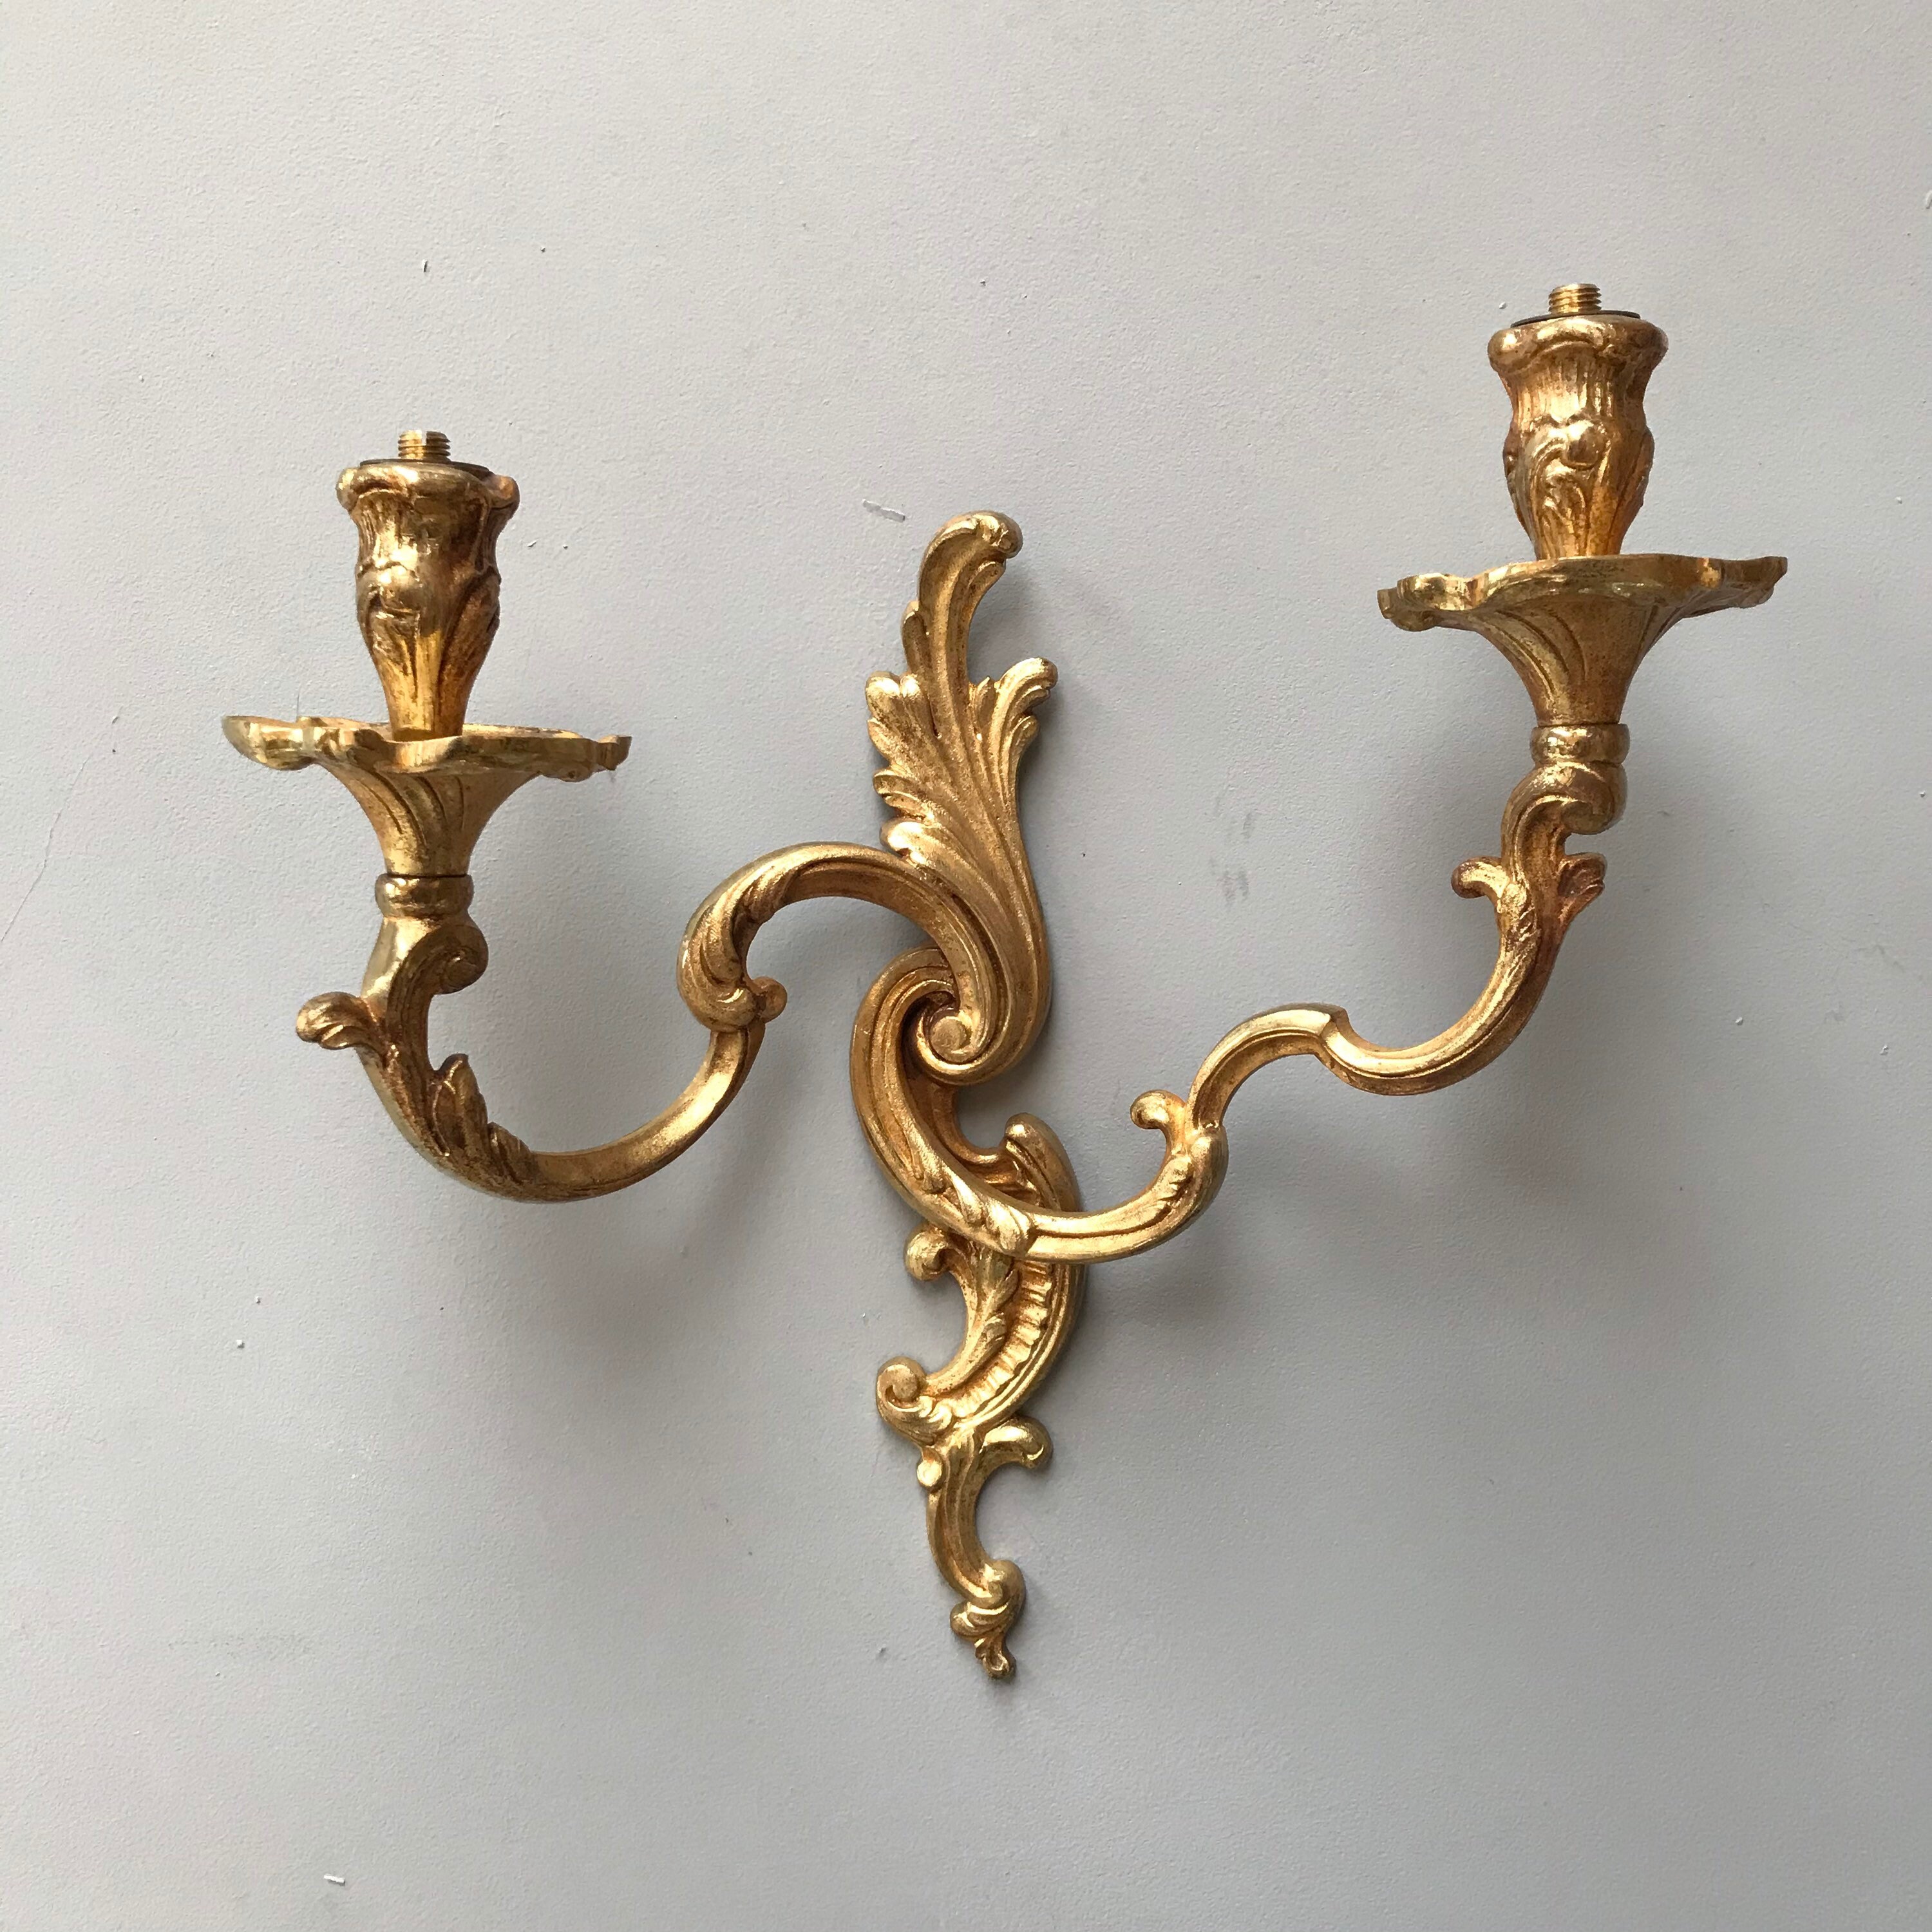 Grand Cru Lourd Français Double Wall Light Romantic Candle Bulb Sconce - Solid Antique Ornate Bronze